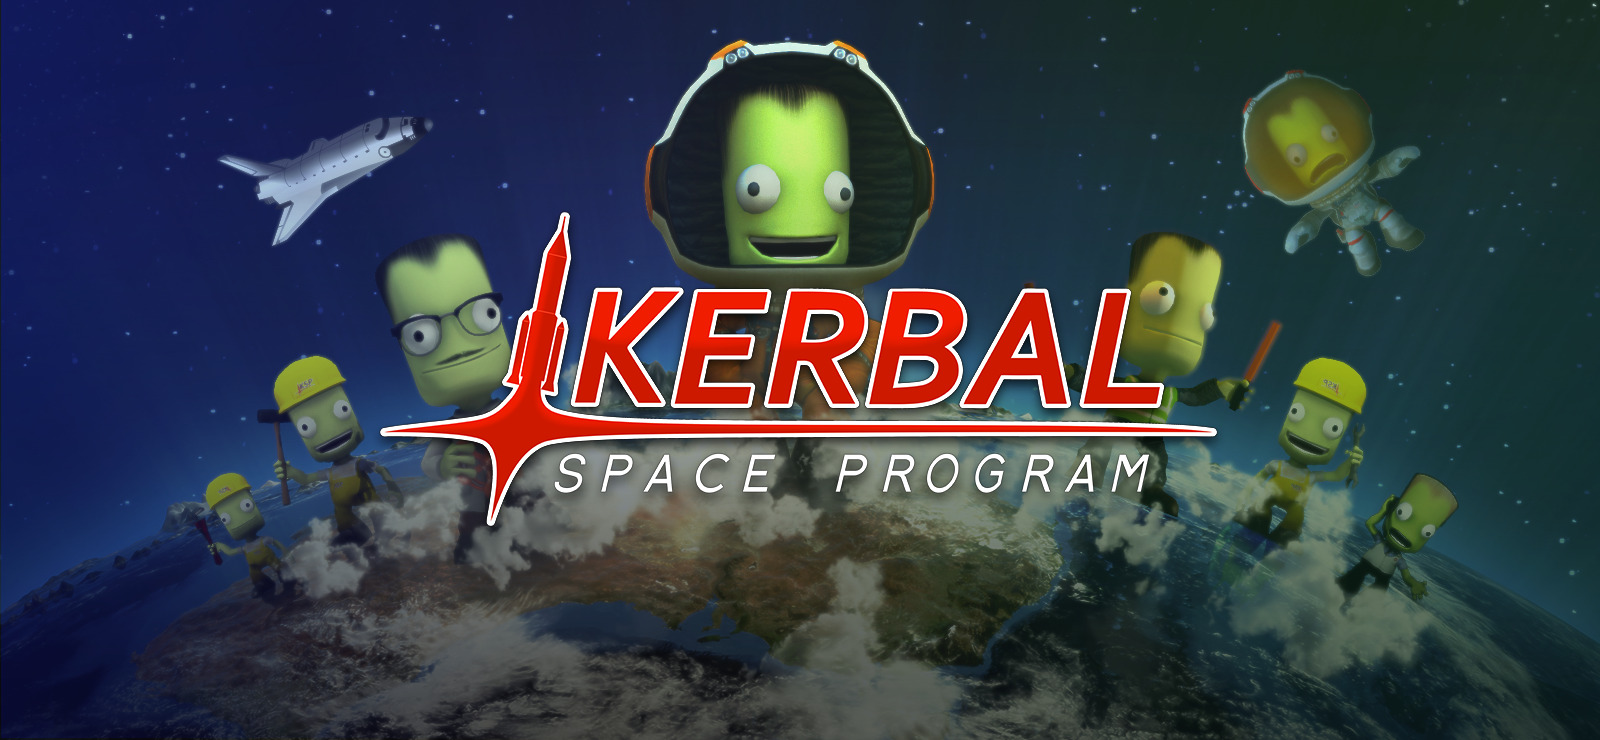 kerbal space program latest version free download